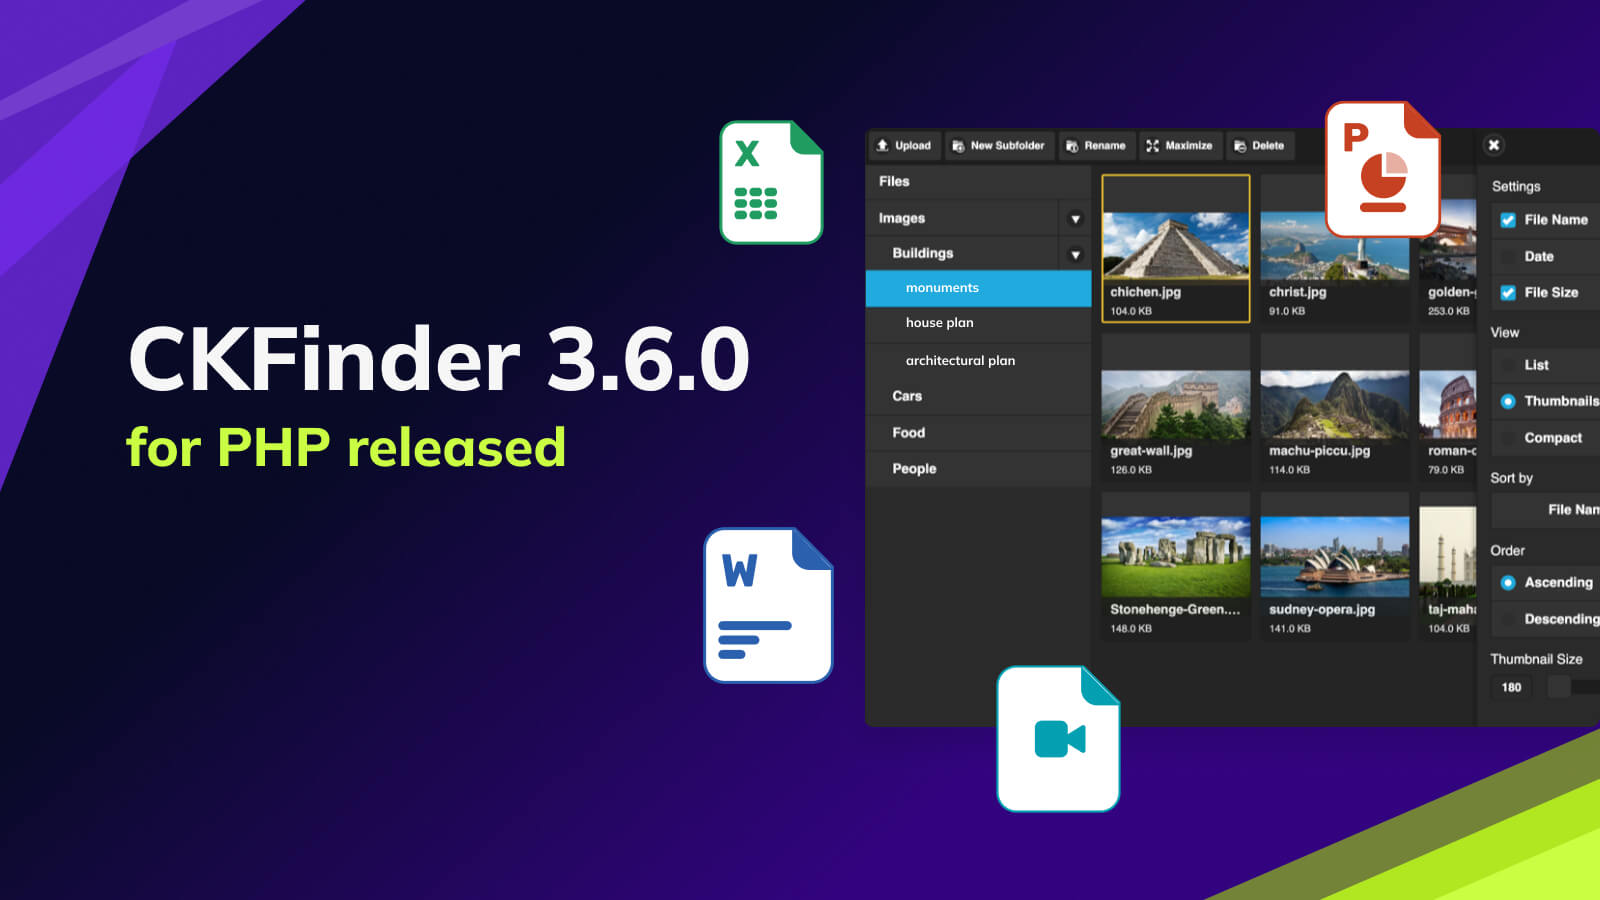 CKFinder 3.6.0 for PHP released